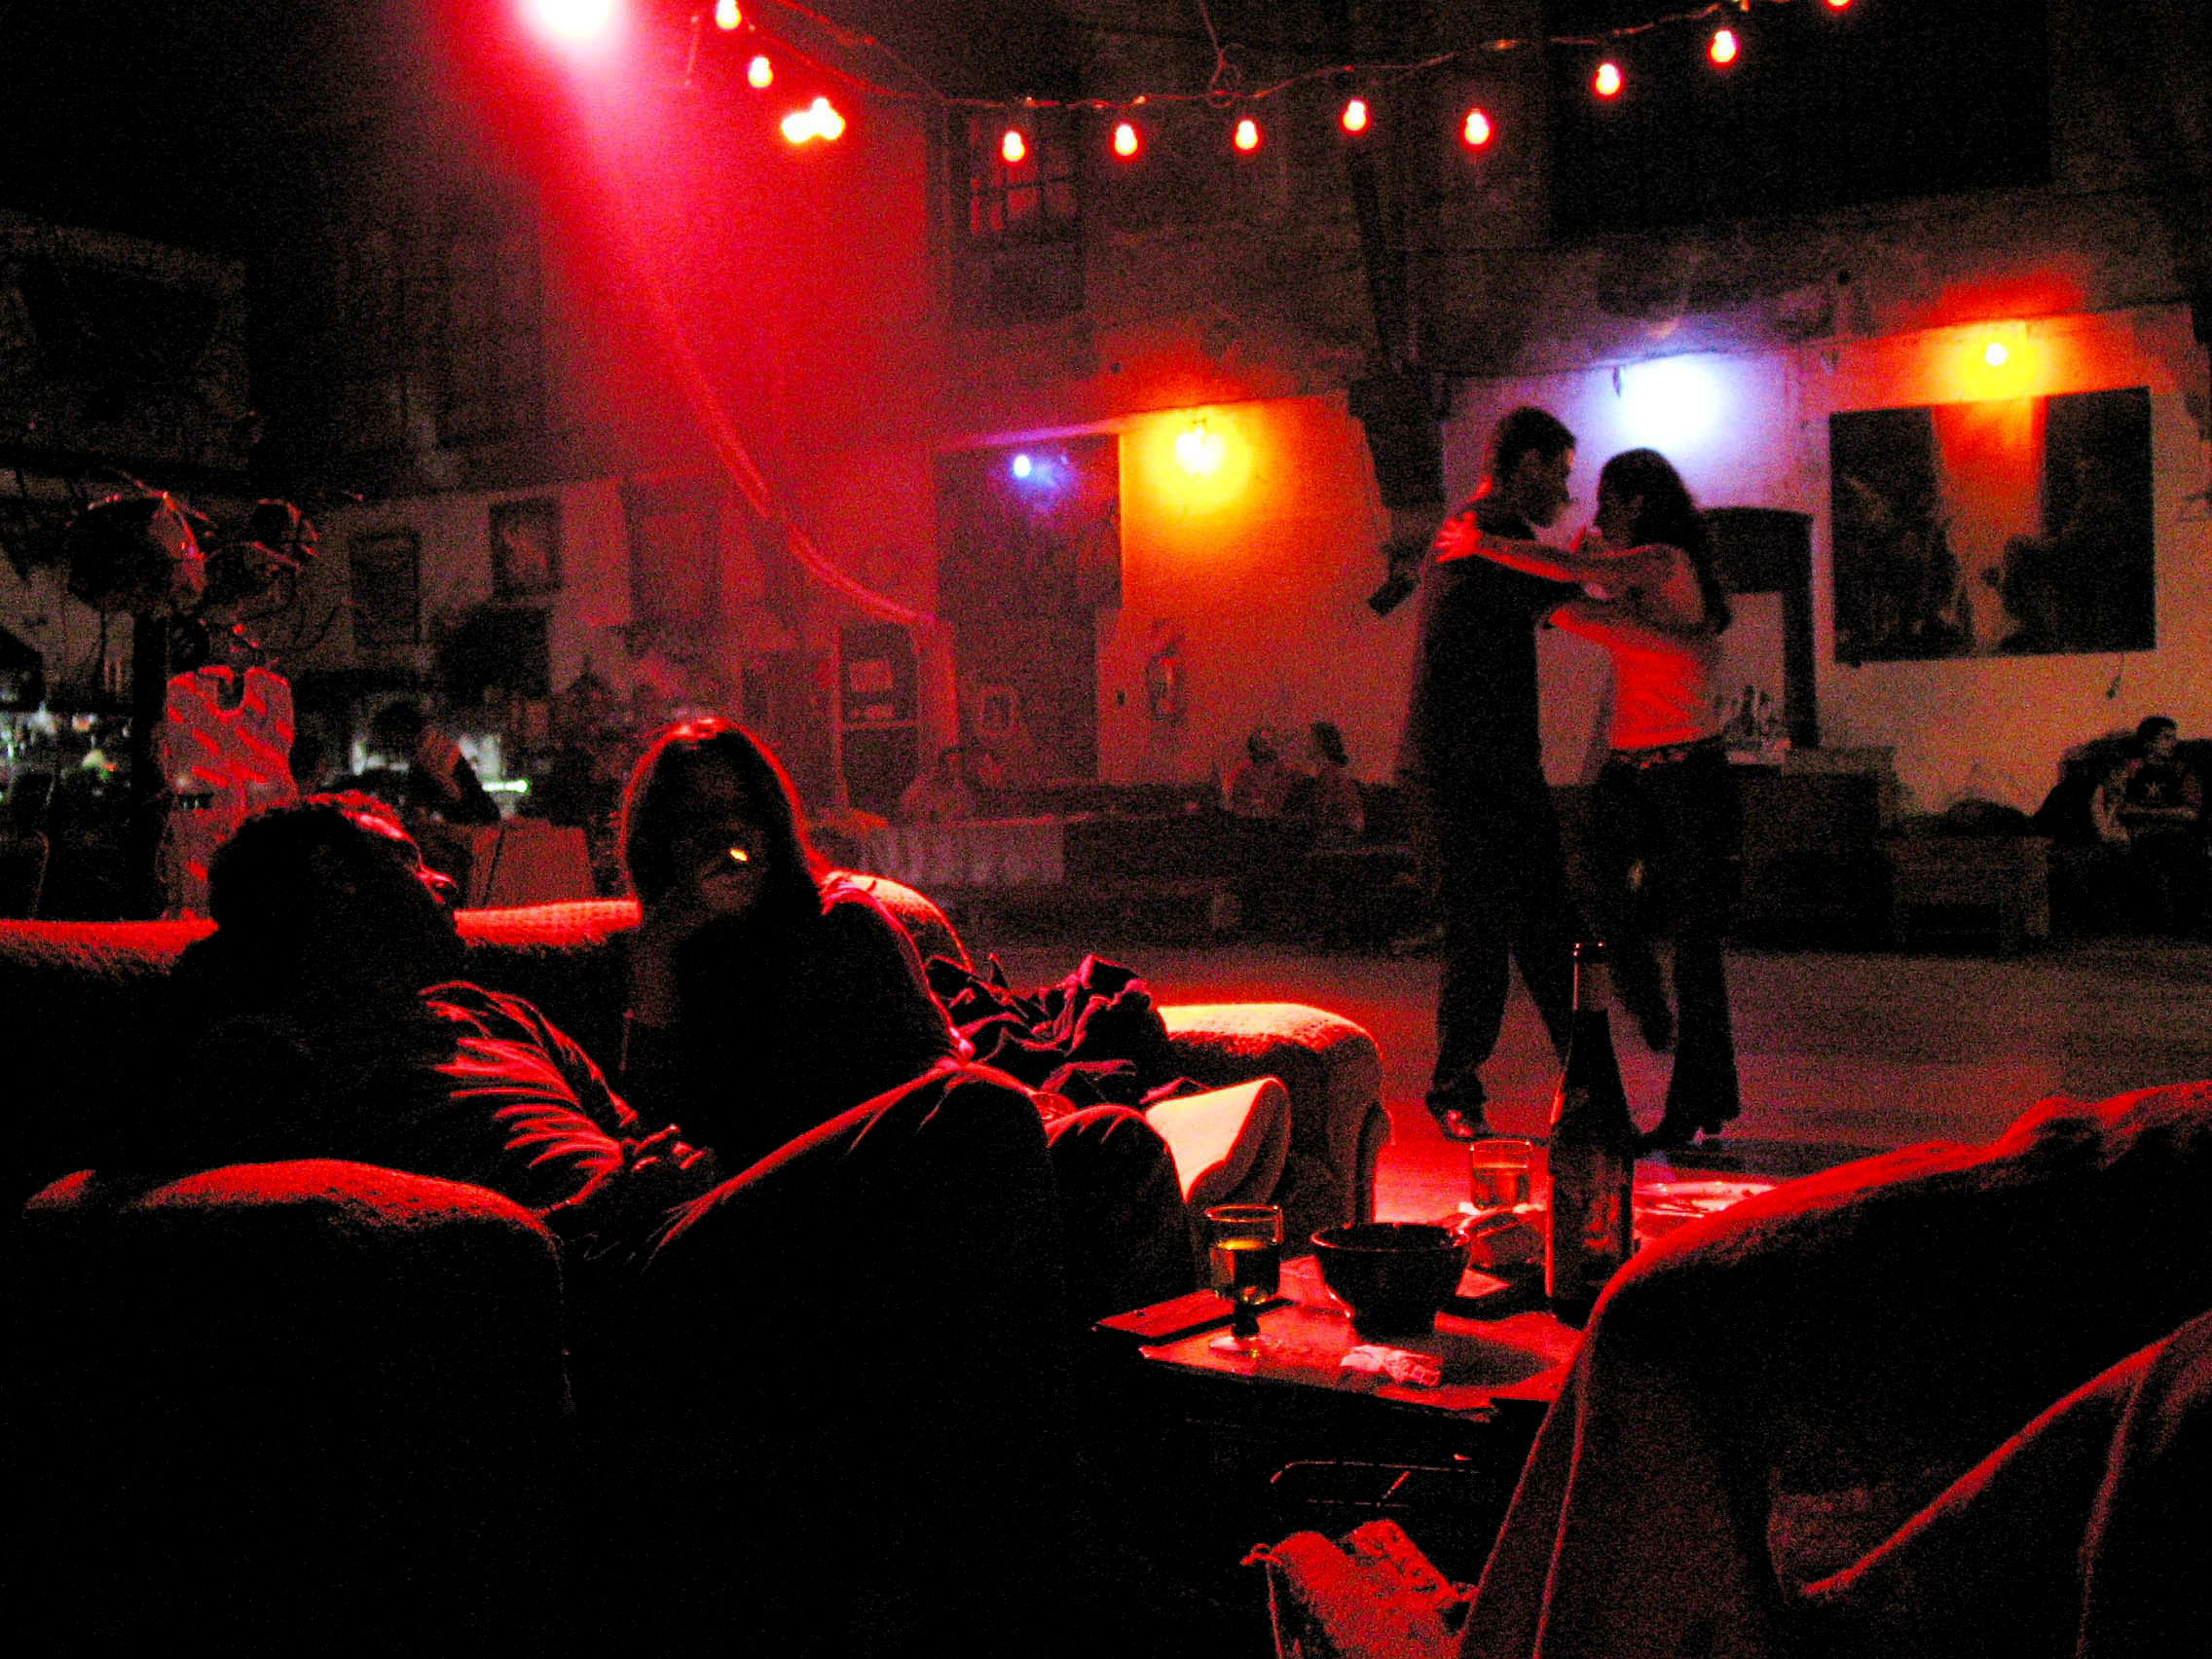 Tango club, Buenos Aires